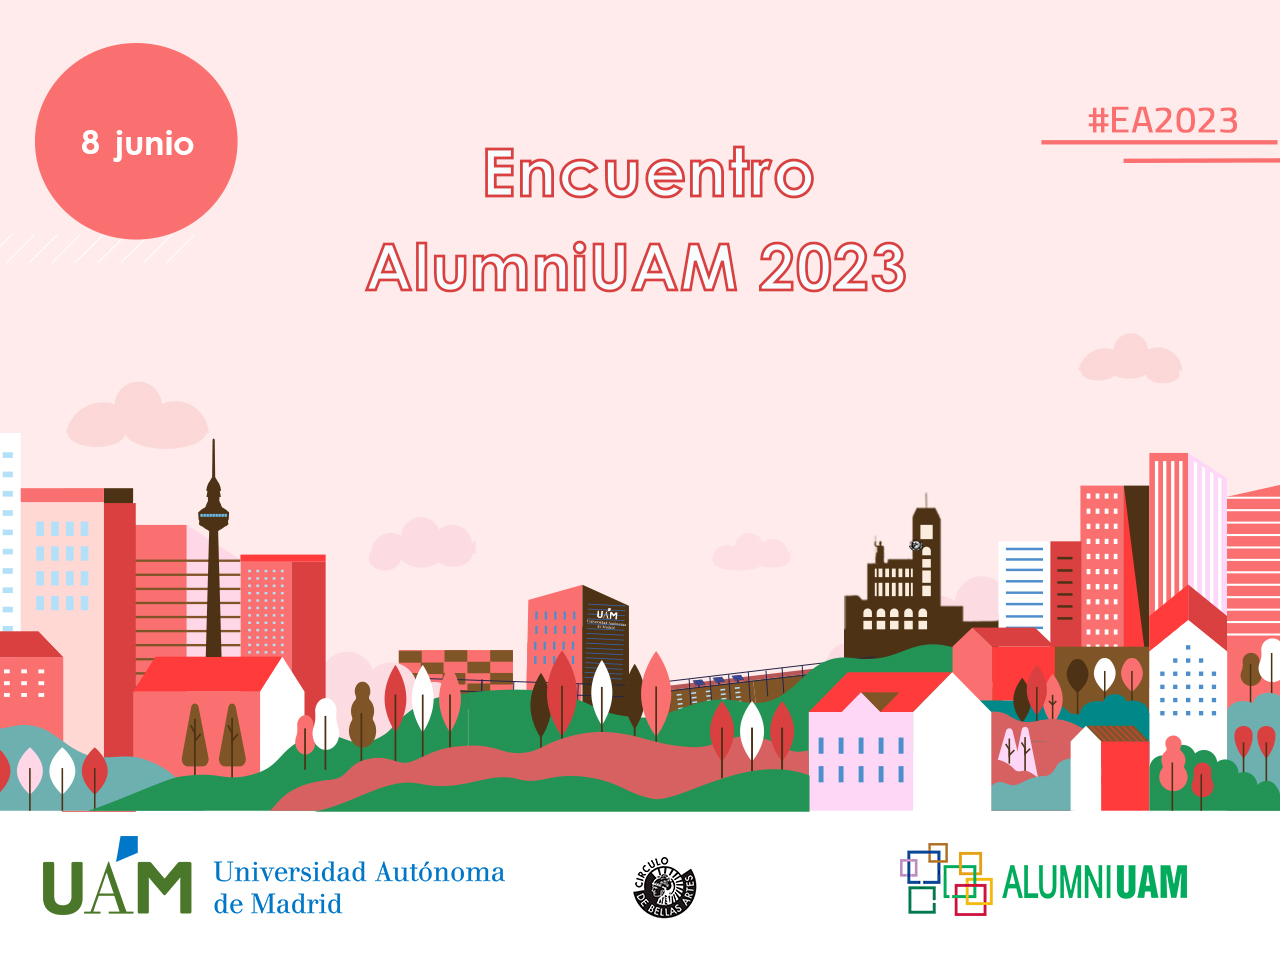 Cartel promocional del Encuentro AlumniUAM 2023